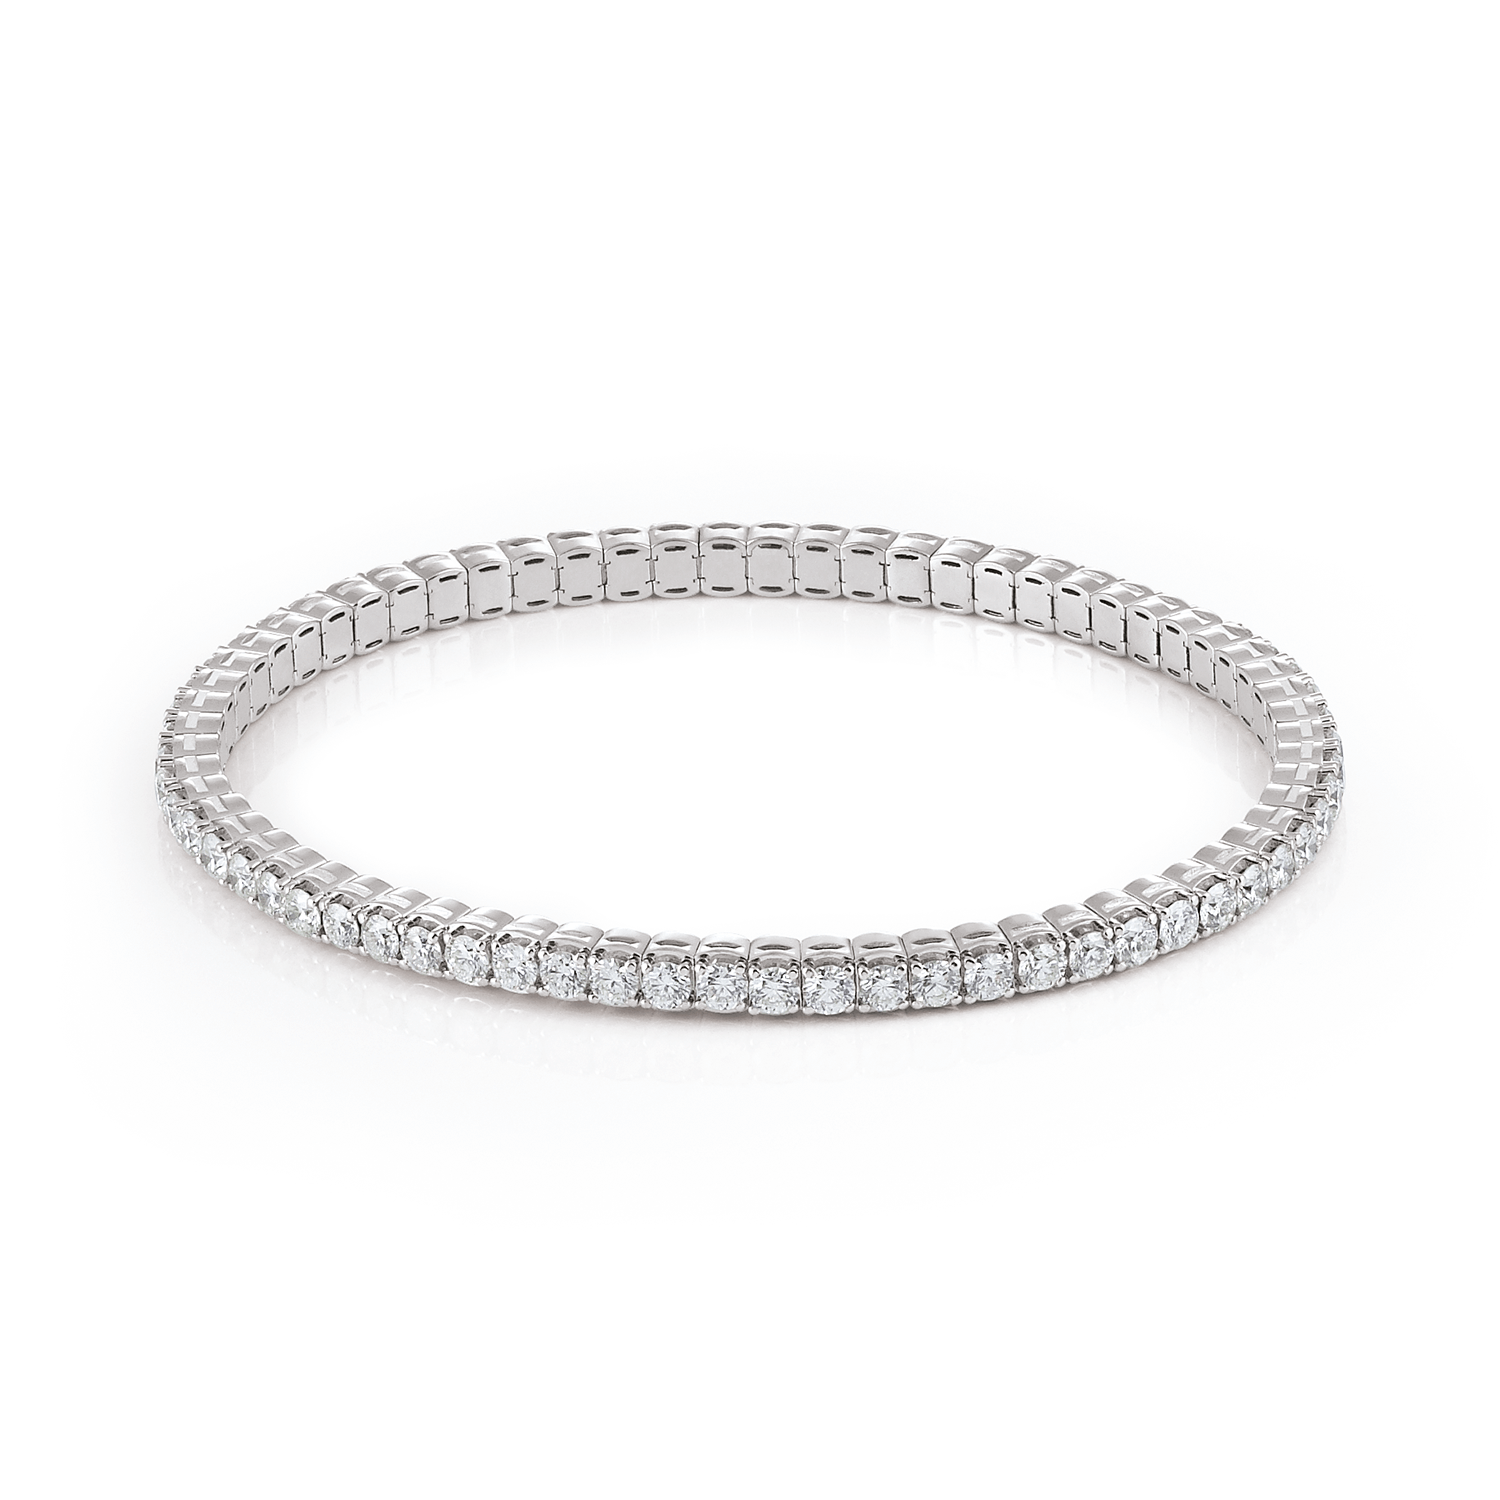 Al Coro Stretchy Bracelet in 18k White Gold with 66 Diamonds - Orsini Jewellers NZ